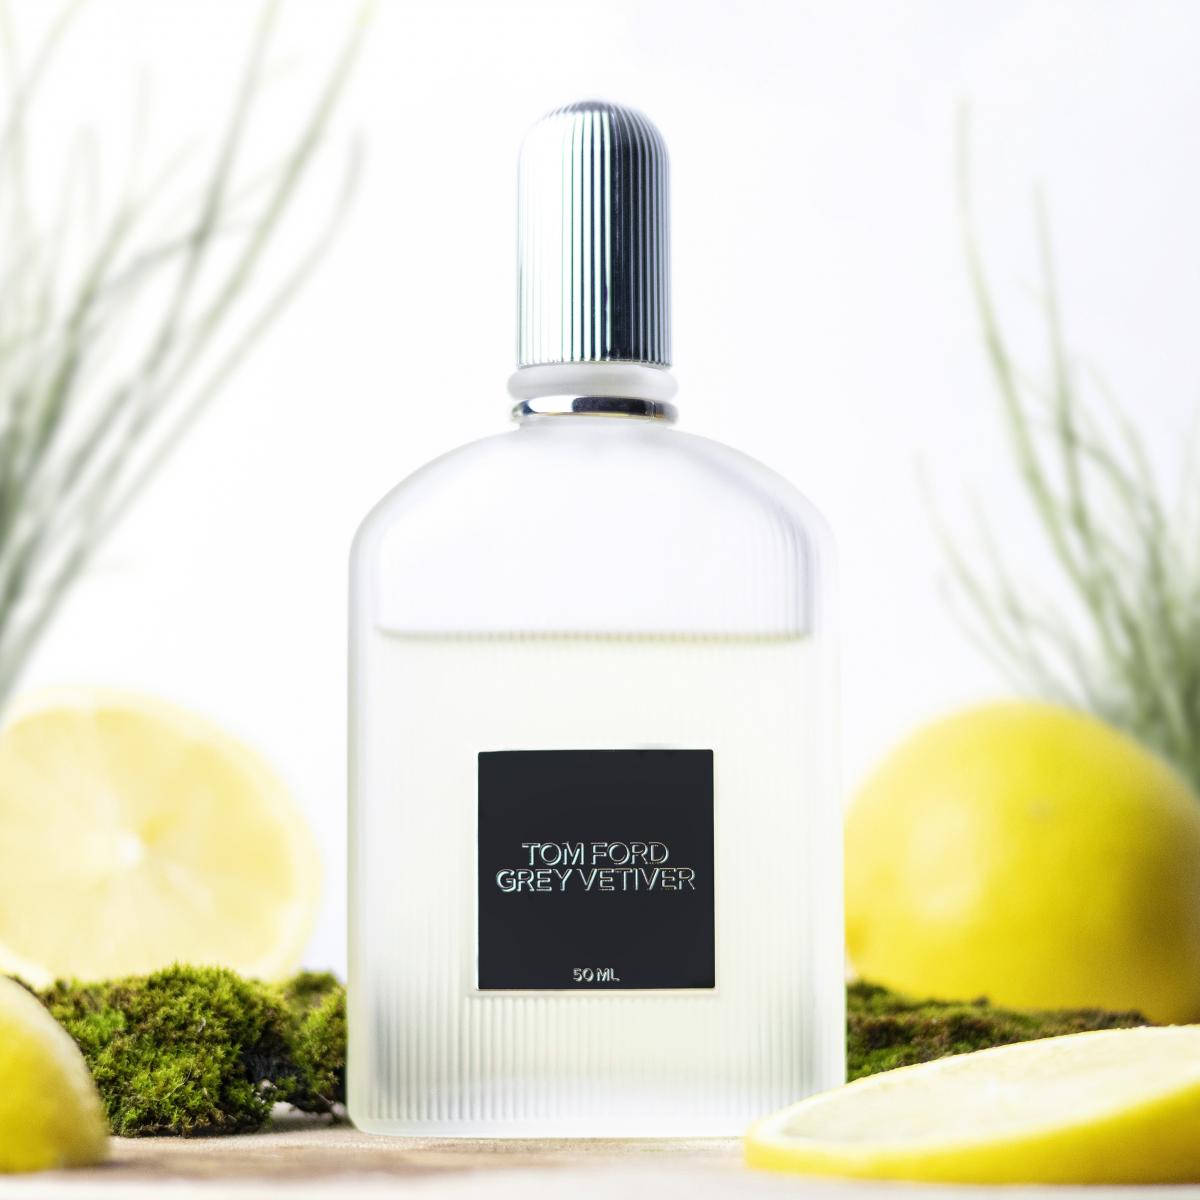 Grey Vetiver Tom Ford zapach - to perfumy dla mężczyzn 2009